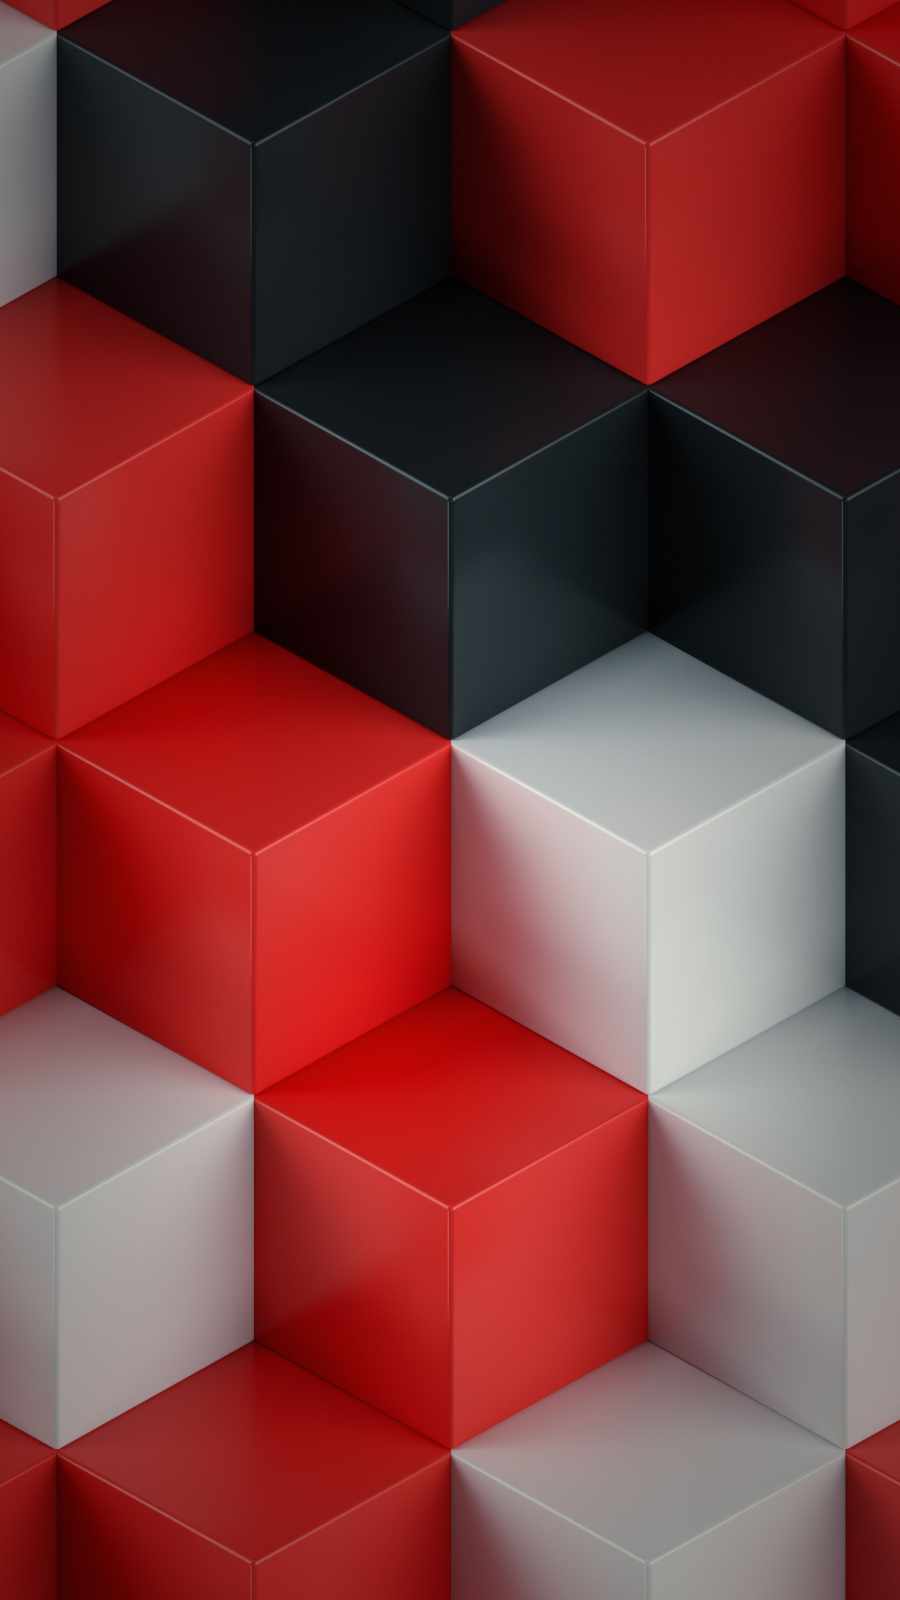 Colorful 3D Cubes iPhone Wallpaper